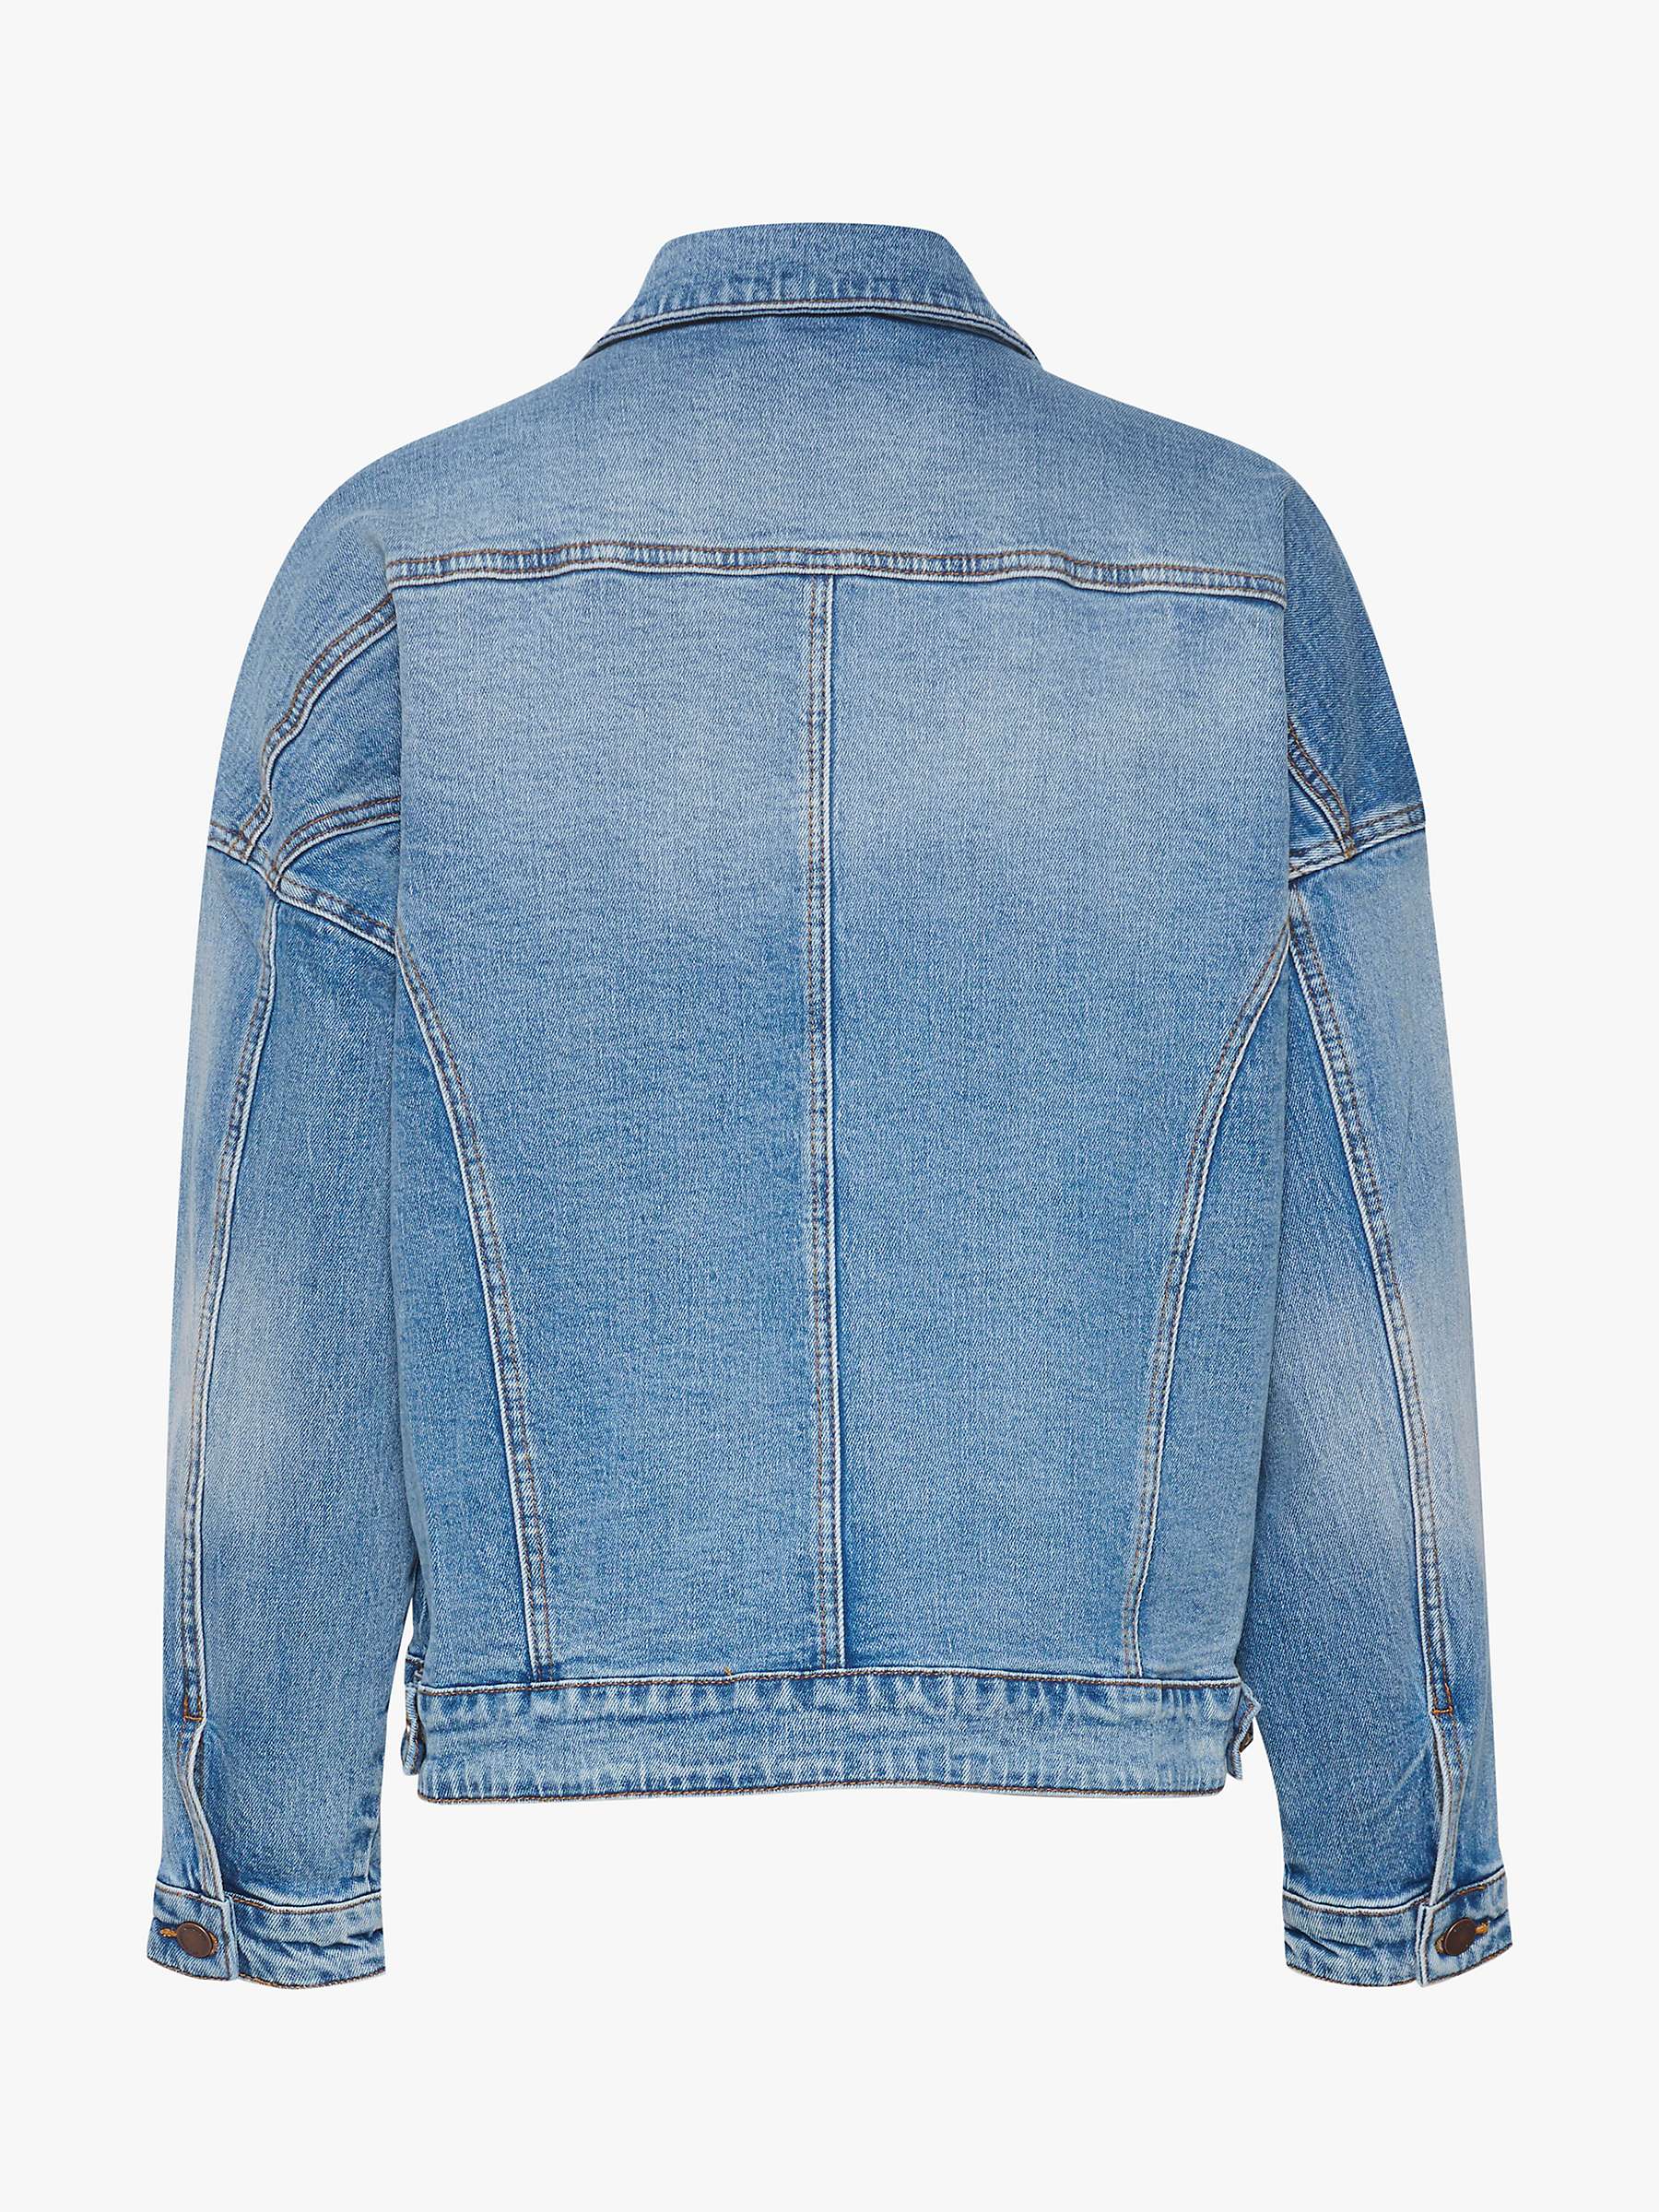 Buy MY ESSENTIAL WARDROBE Dango Casual Fit Denim Jacket, Blue Retro Wash Online at johnlewis.com